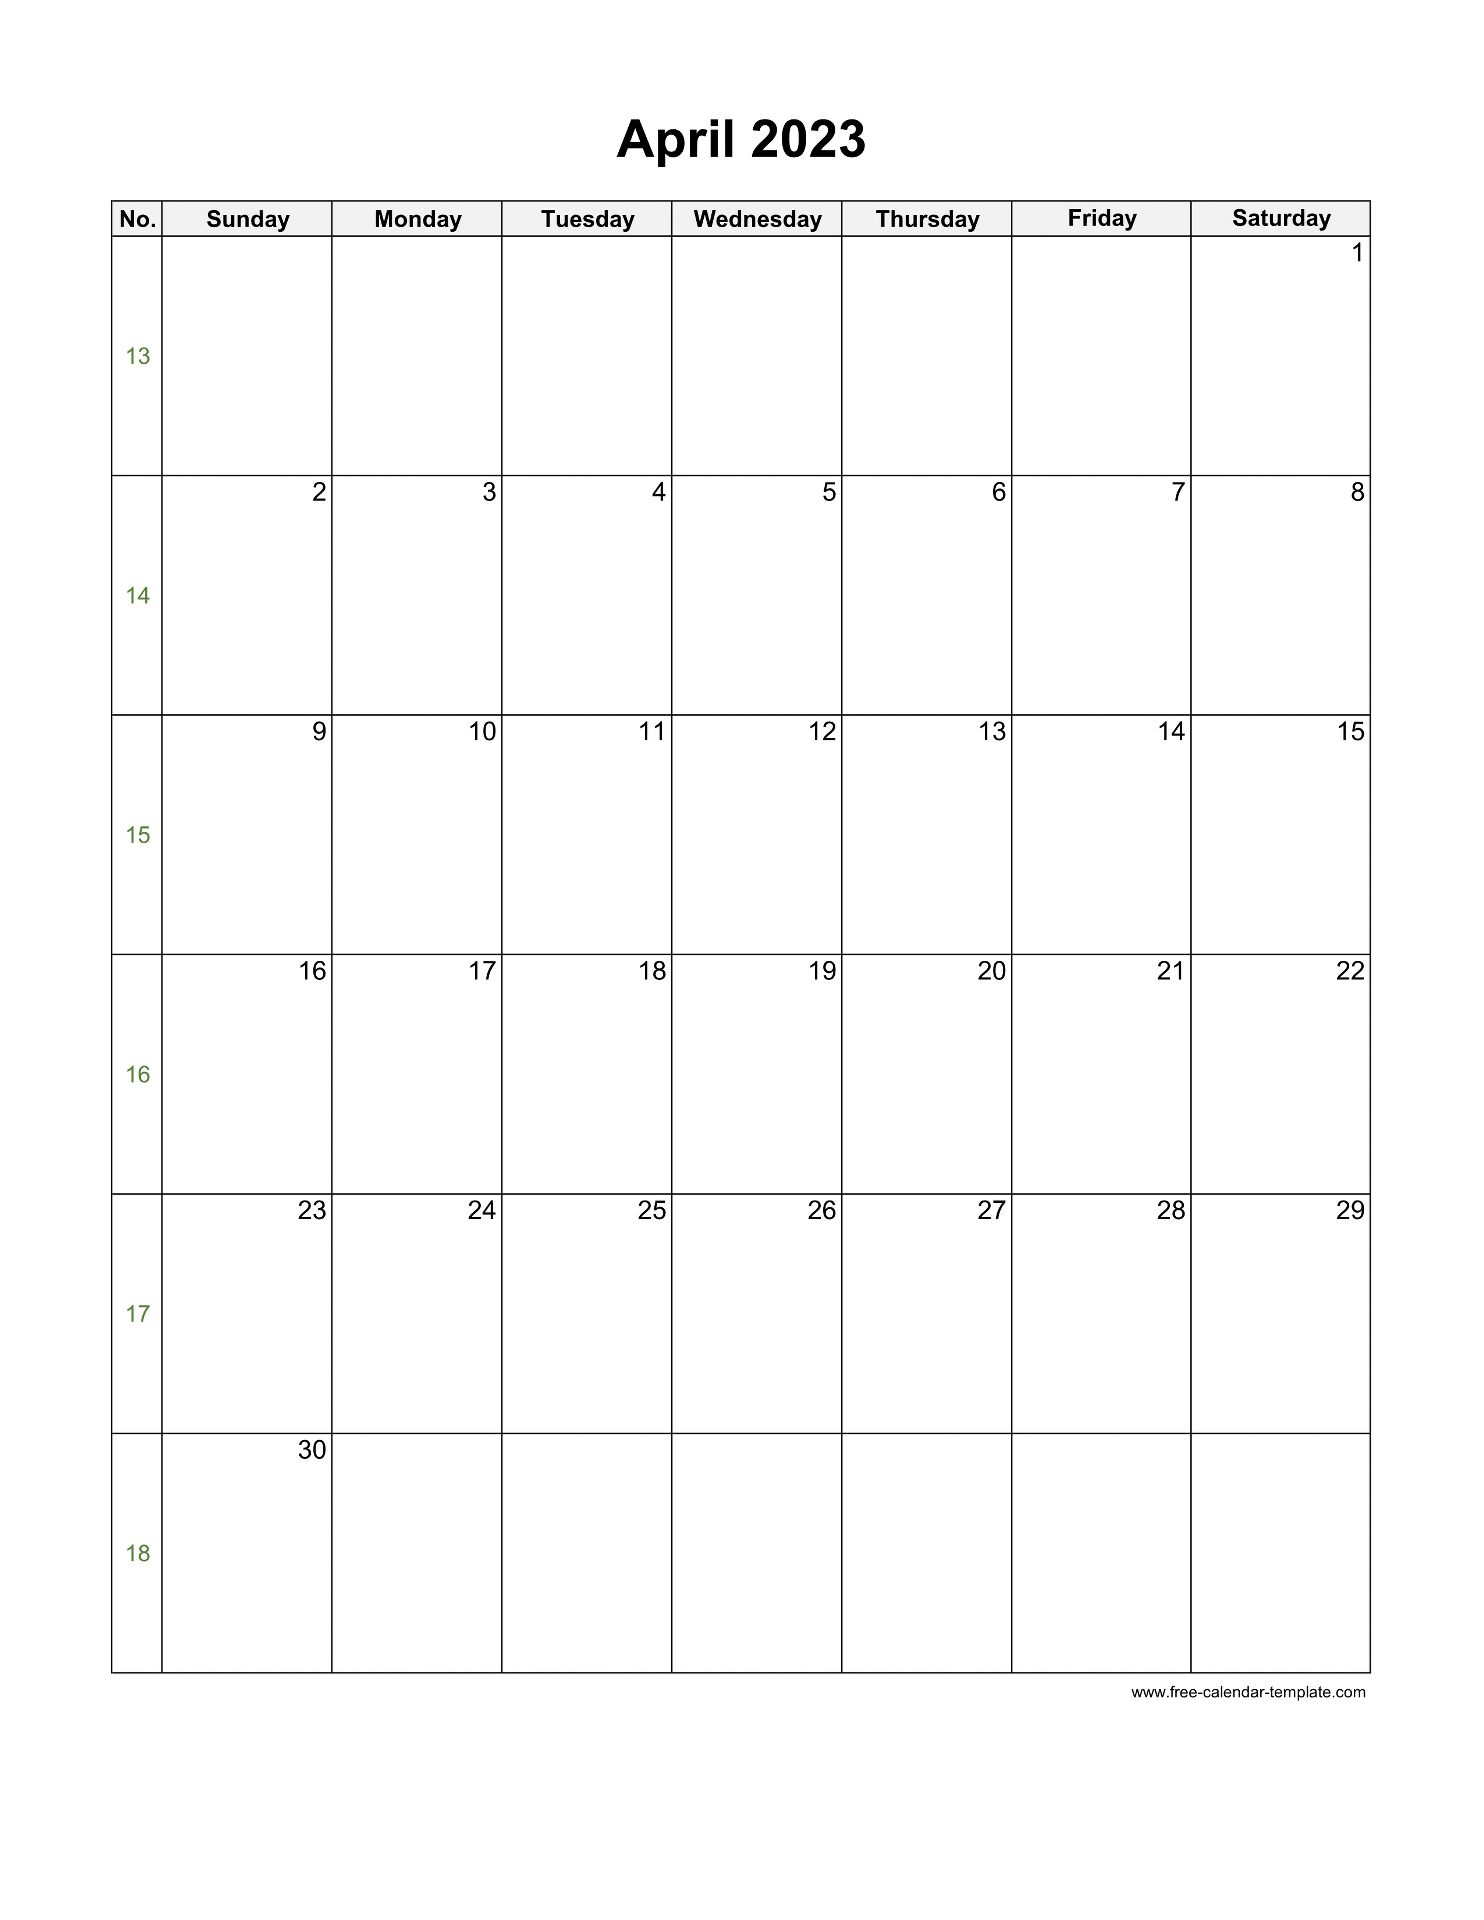 Printable Calendar April And May 2023